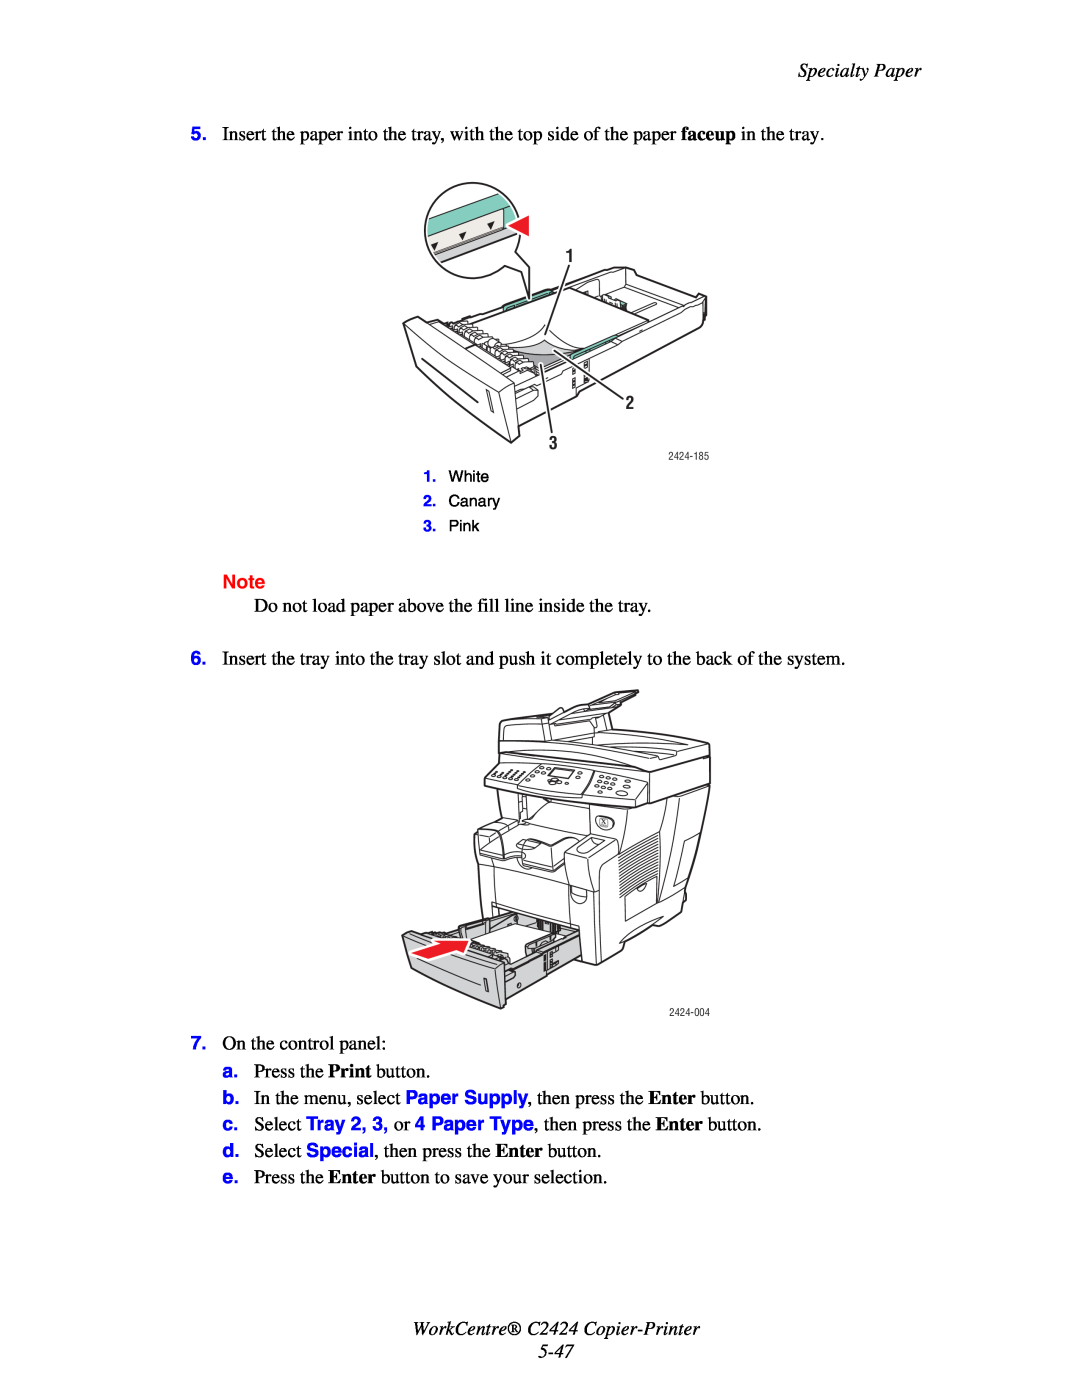 2Wire C424 manual WorkCentre C2424 Copier-Printer, Specialty Paper 